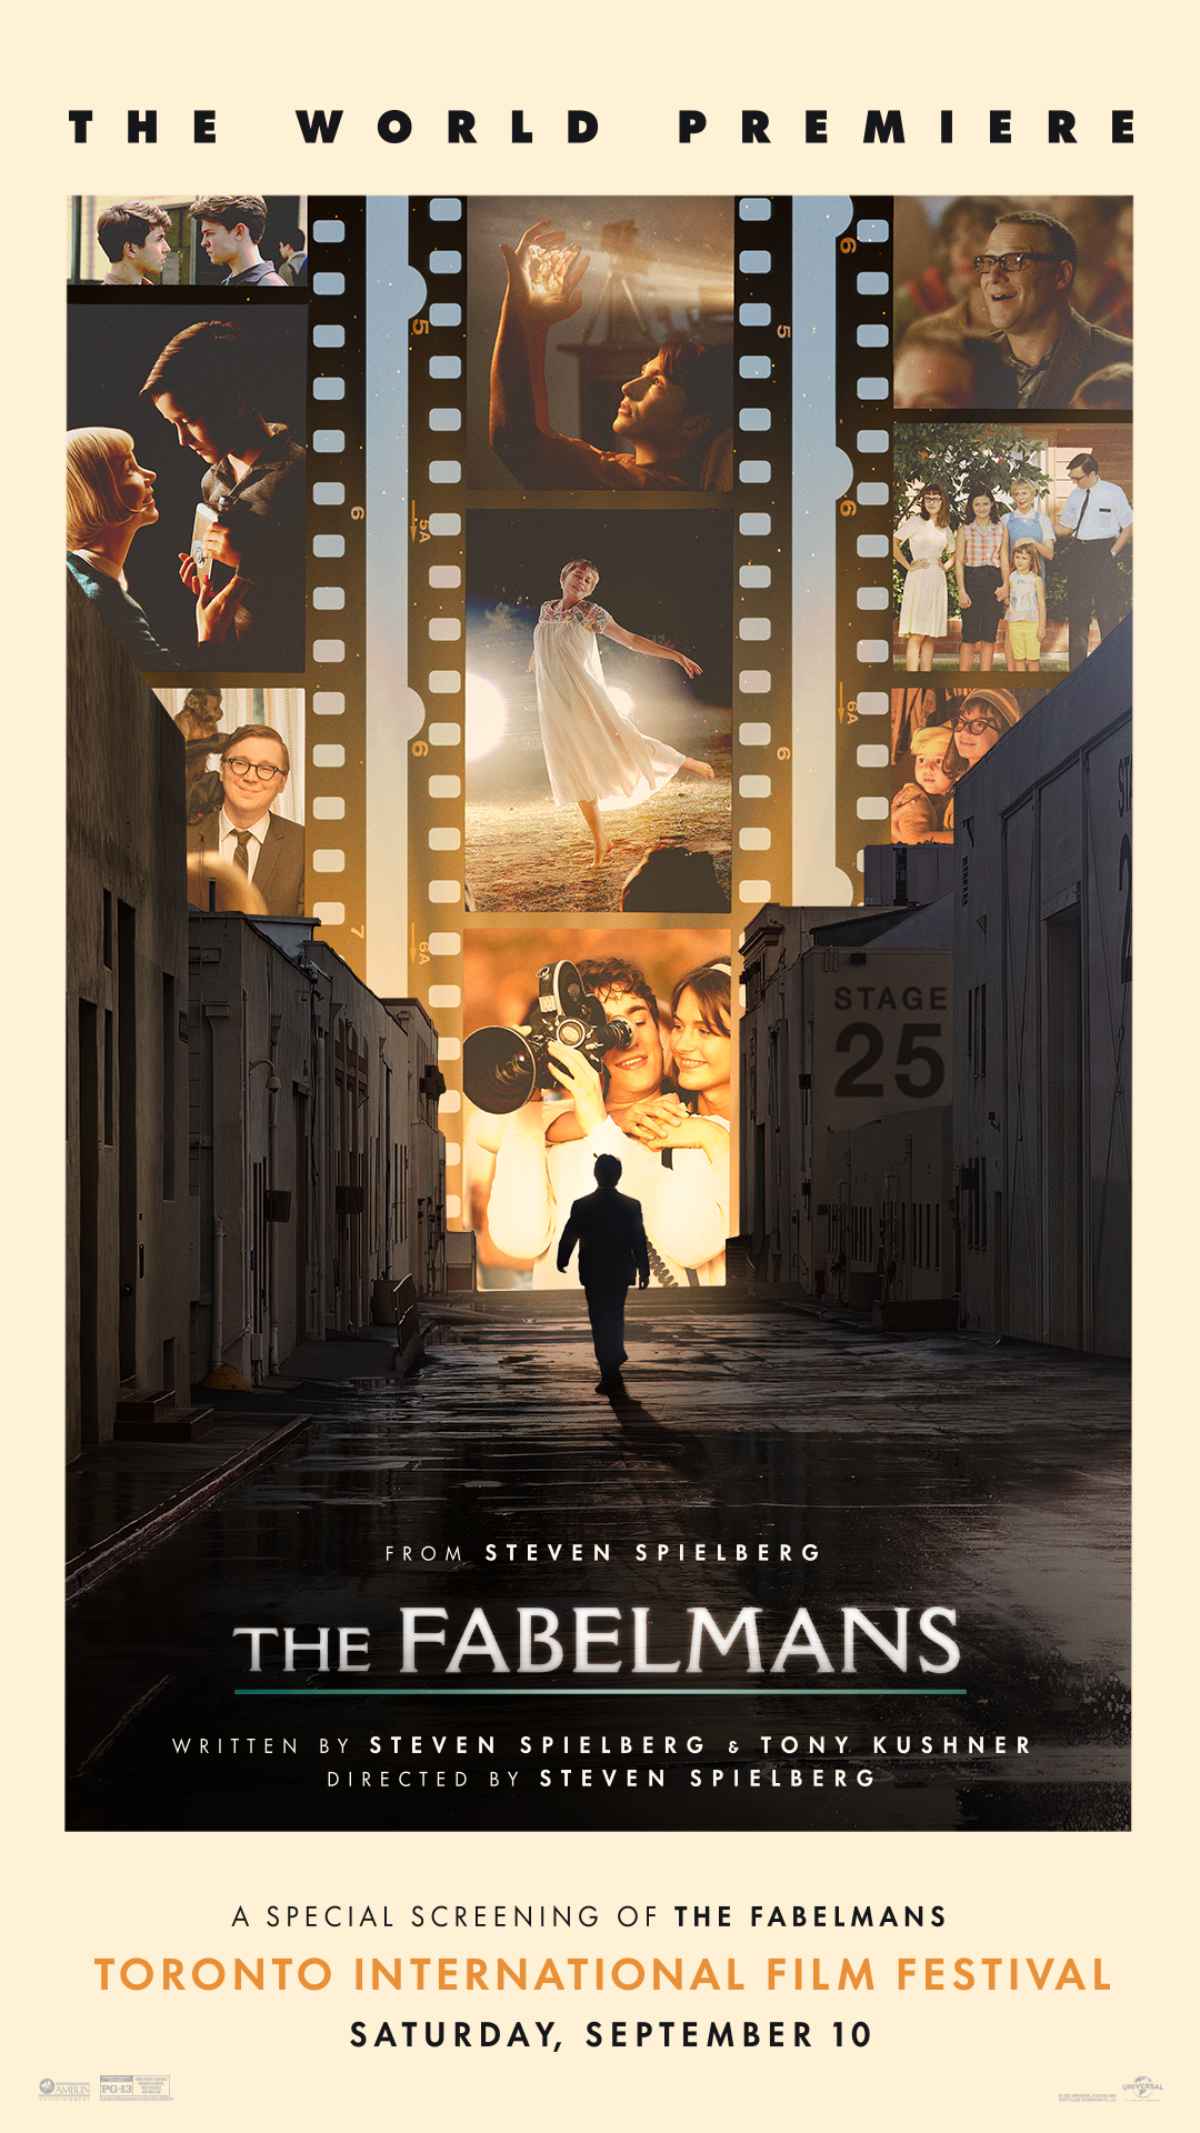 The Fabelmans Trailer Reveals Spielberg's New Film